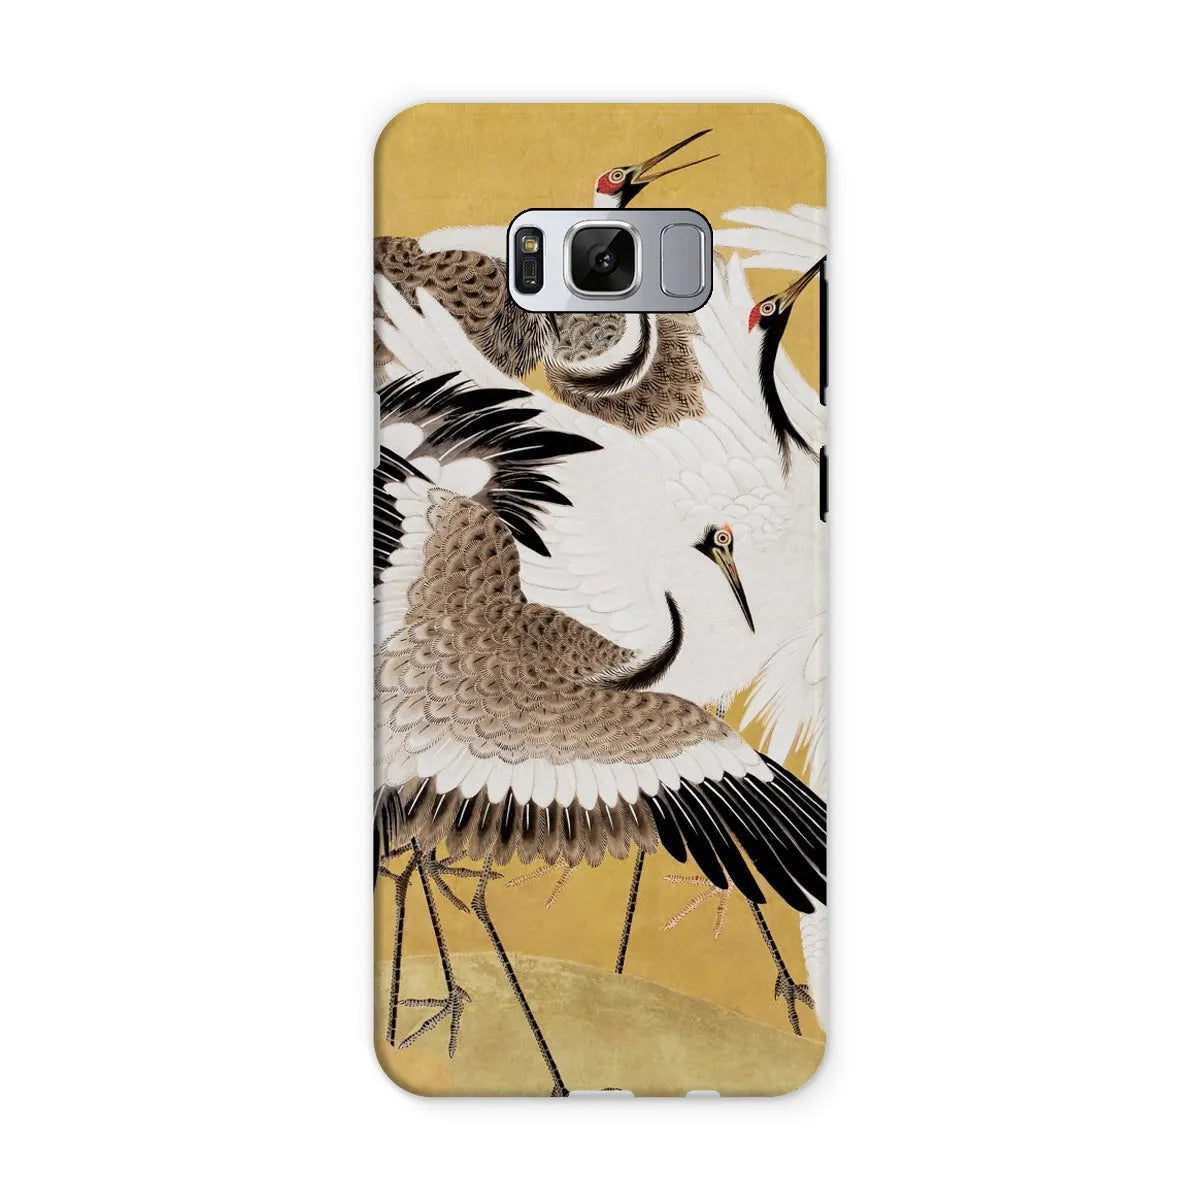 Flock Of Cranes Japanese Bird Art Phone Case - Ishida Yūtei - Samsung Galaxy S8 / Matte - Mobile Phone Cases